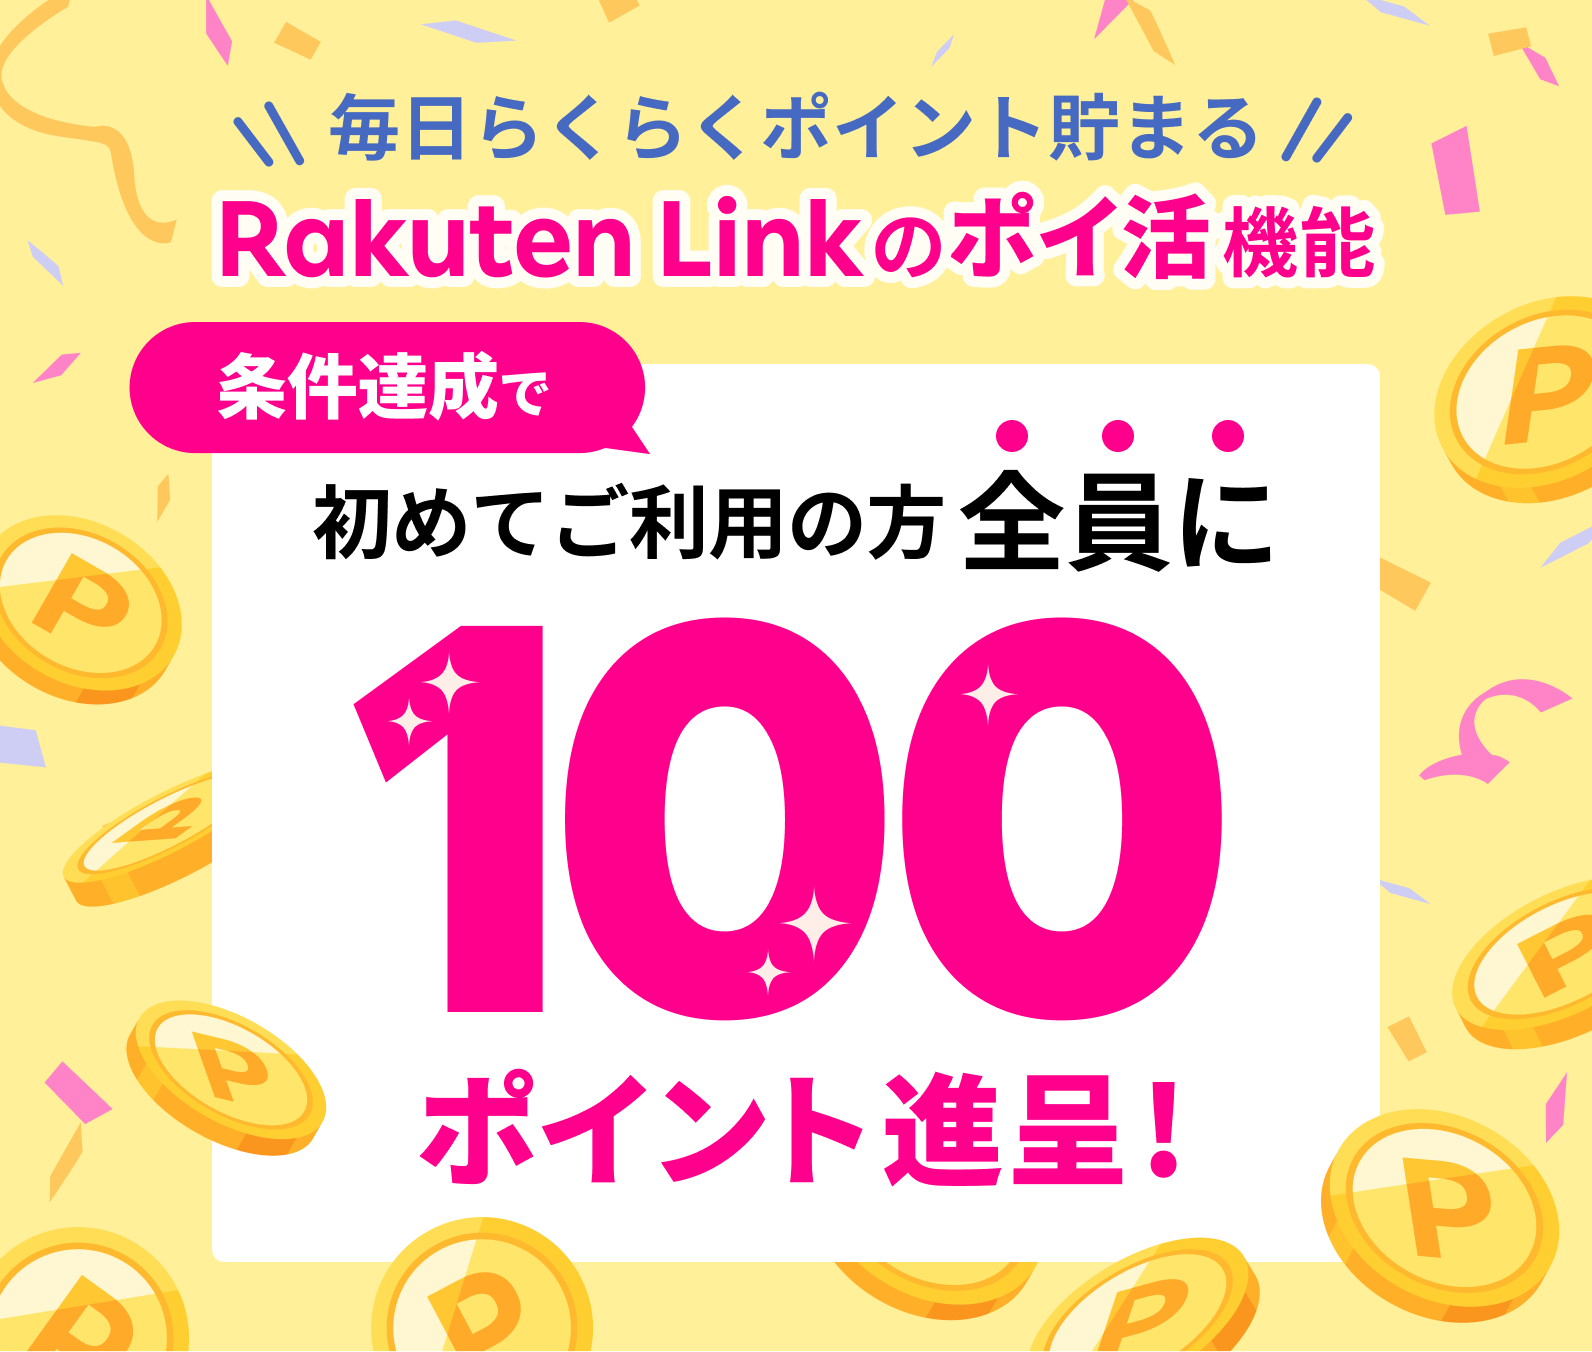 Rakuten Link のポイ活機能 条件達成で 初めてご利用の方全員に100ポイント進呈！ ※要エントリー